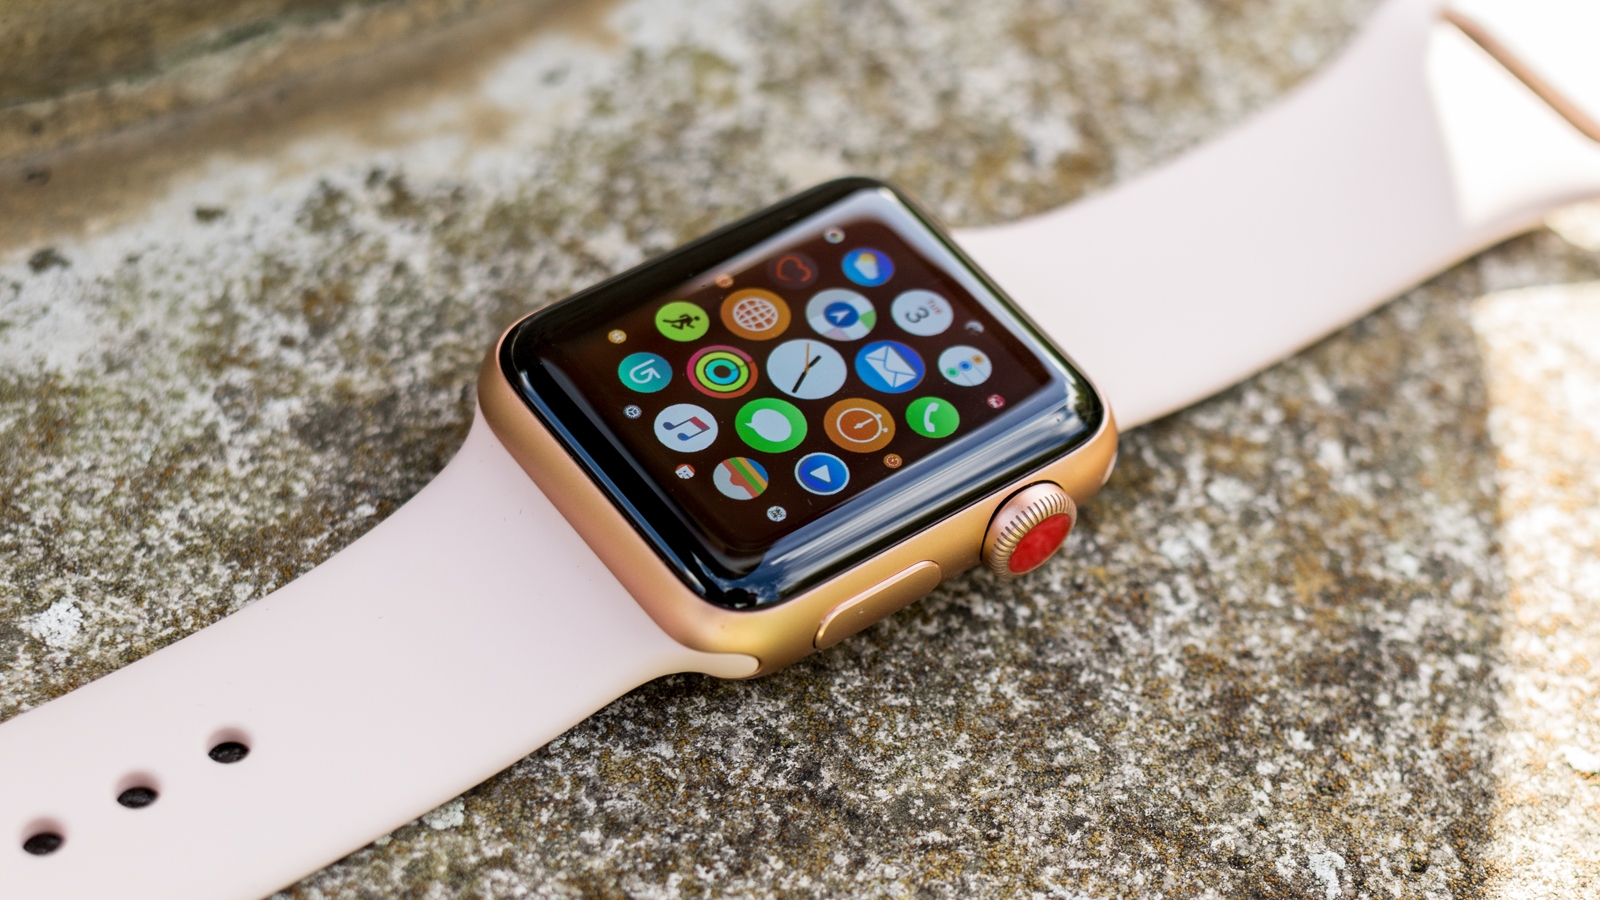 Apple watch 23. Часы Apple IWATCH Series 3. Apple watch Series 3 38mm. Apple watch Series 3 38mm Gold. Apple watch 3 38 mm Gold.